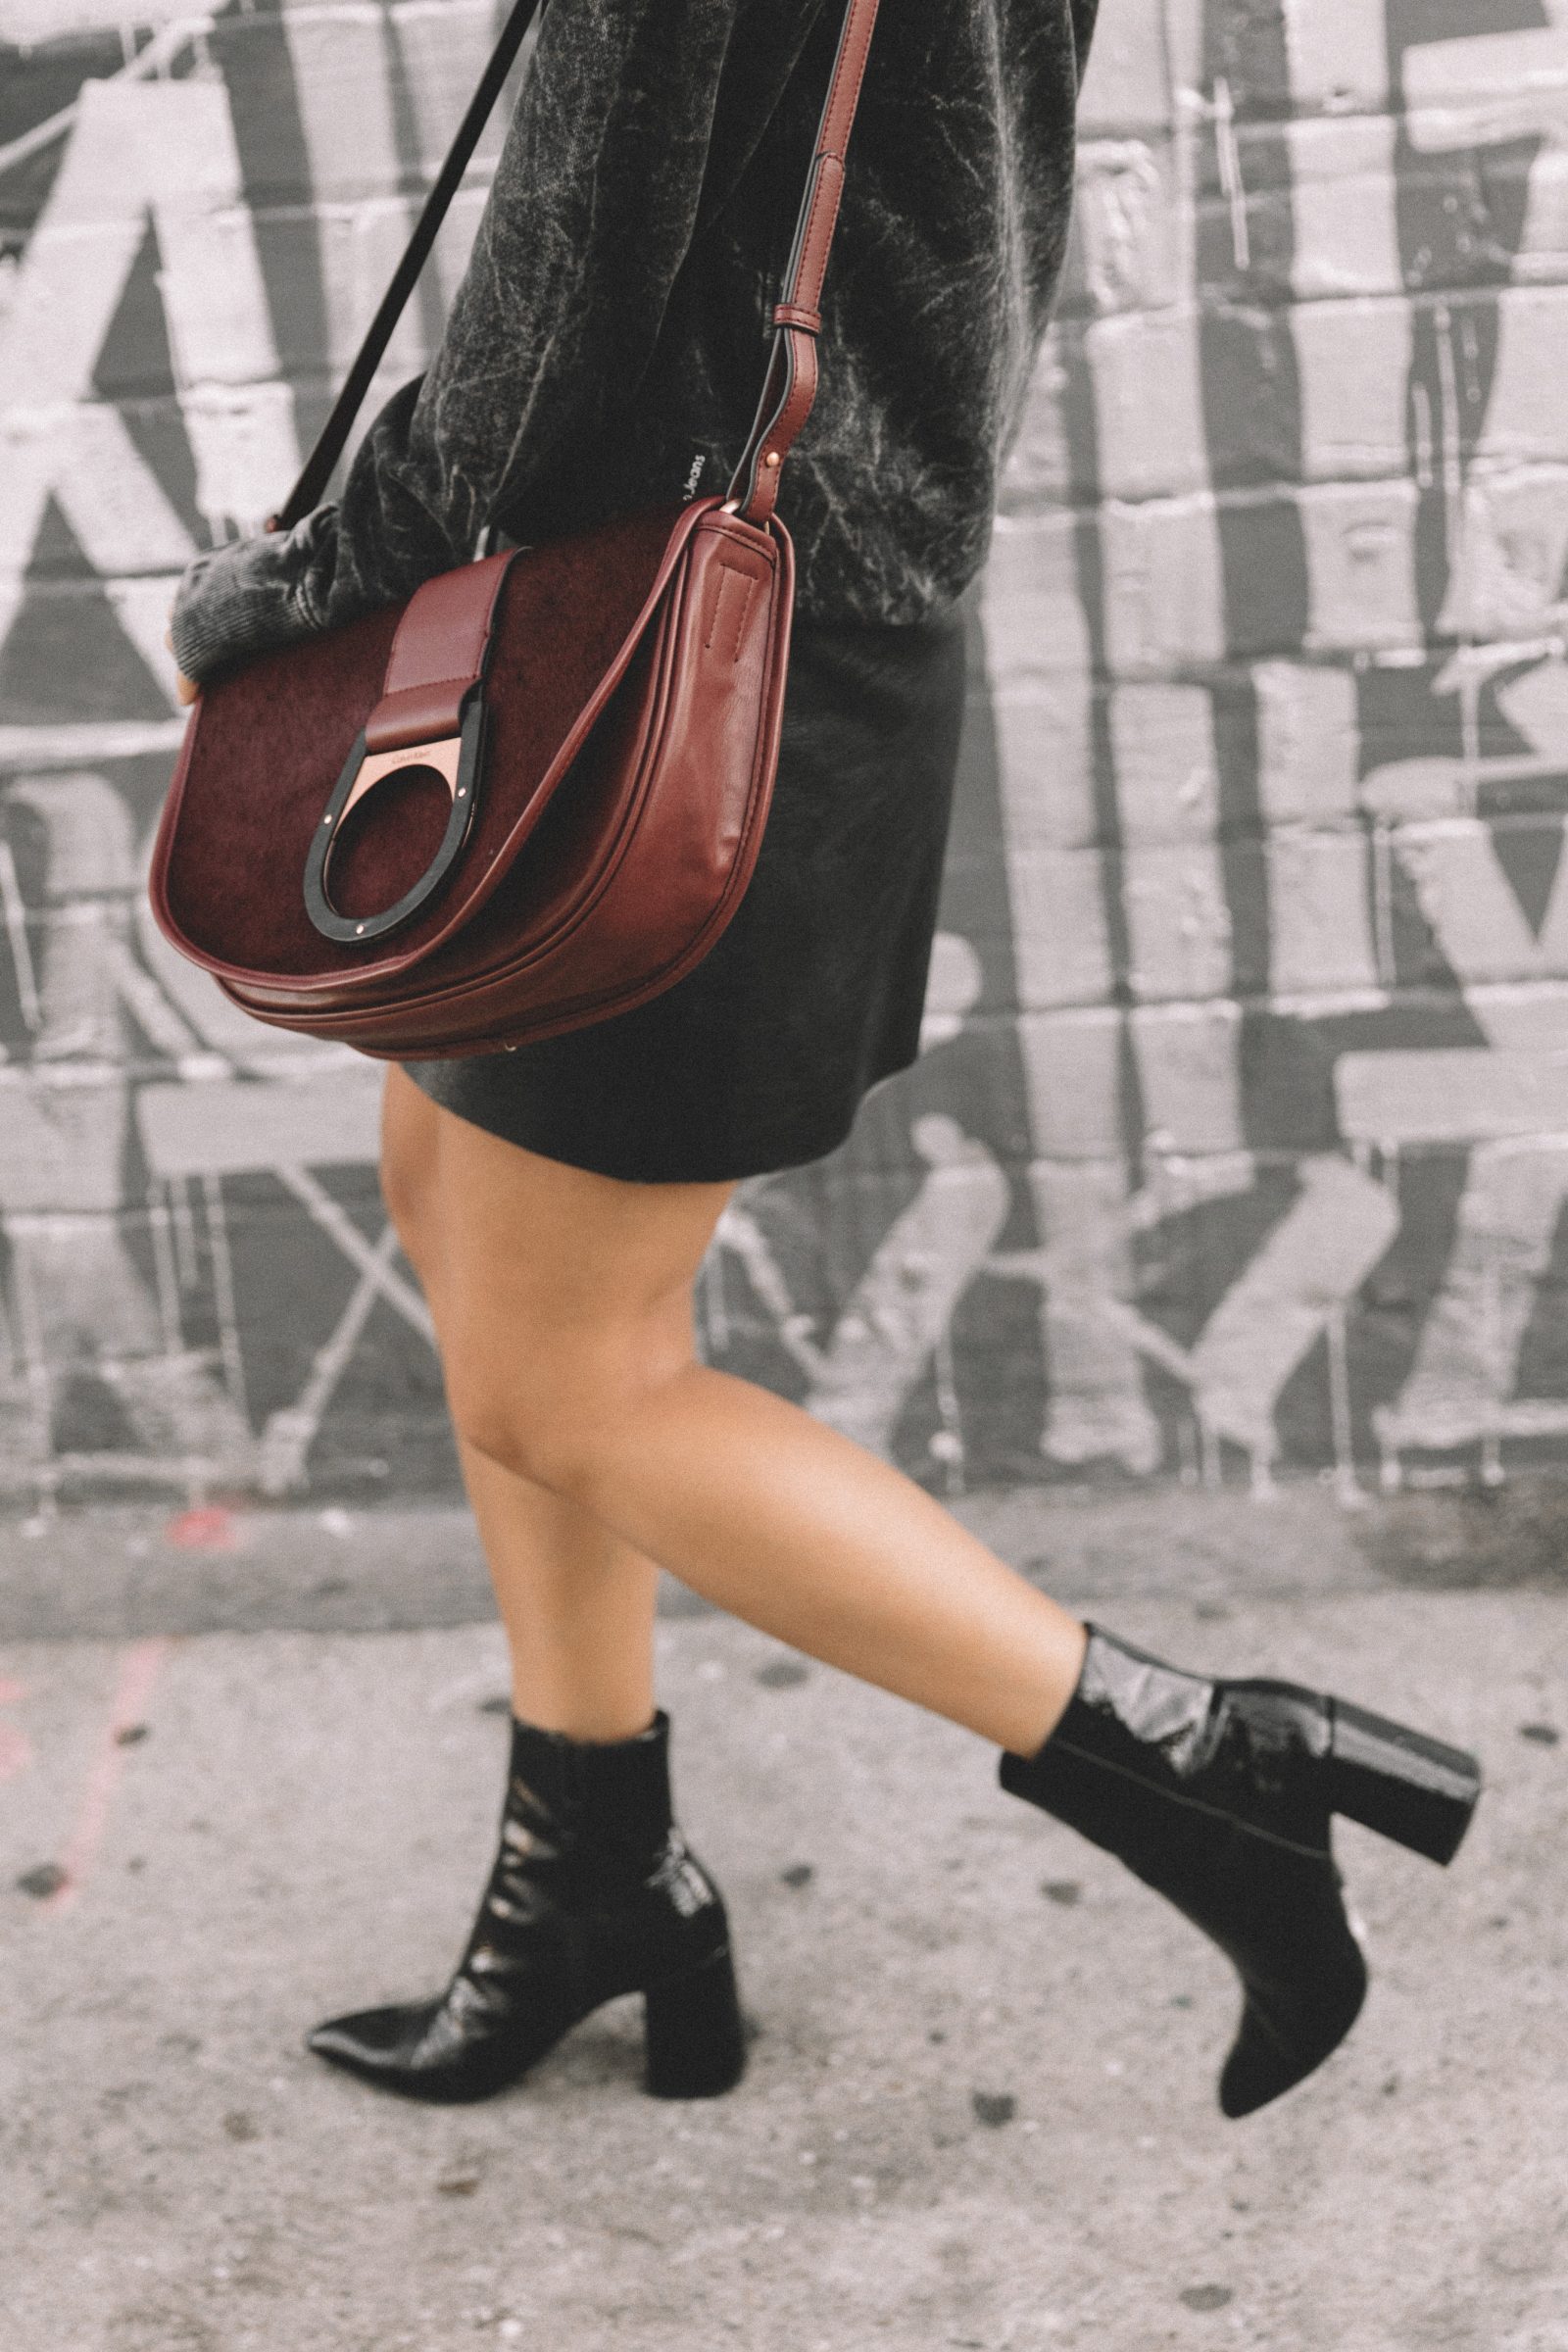 calvin_klein_bag-burgundy_bag-ck_sweatshirt-leather_shirt-total_black_outfit-street_style-los_angeles-collage_vintage-25